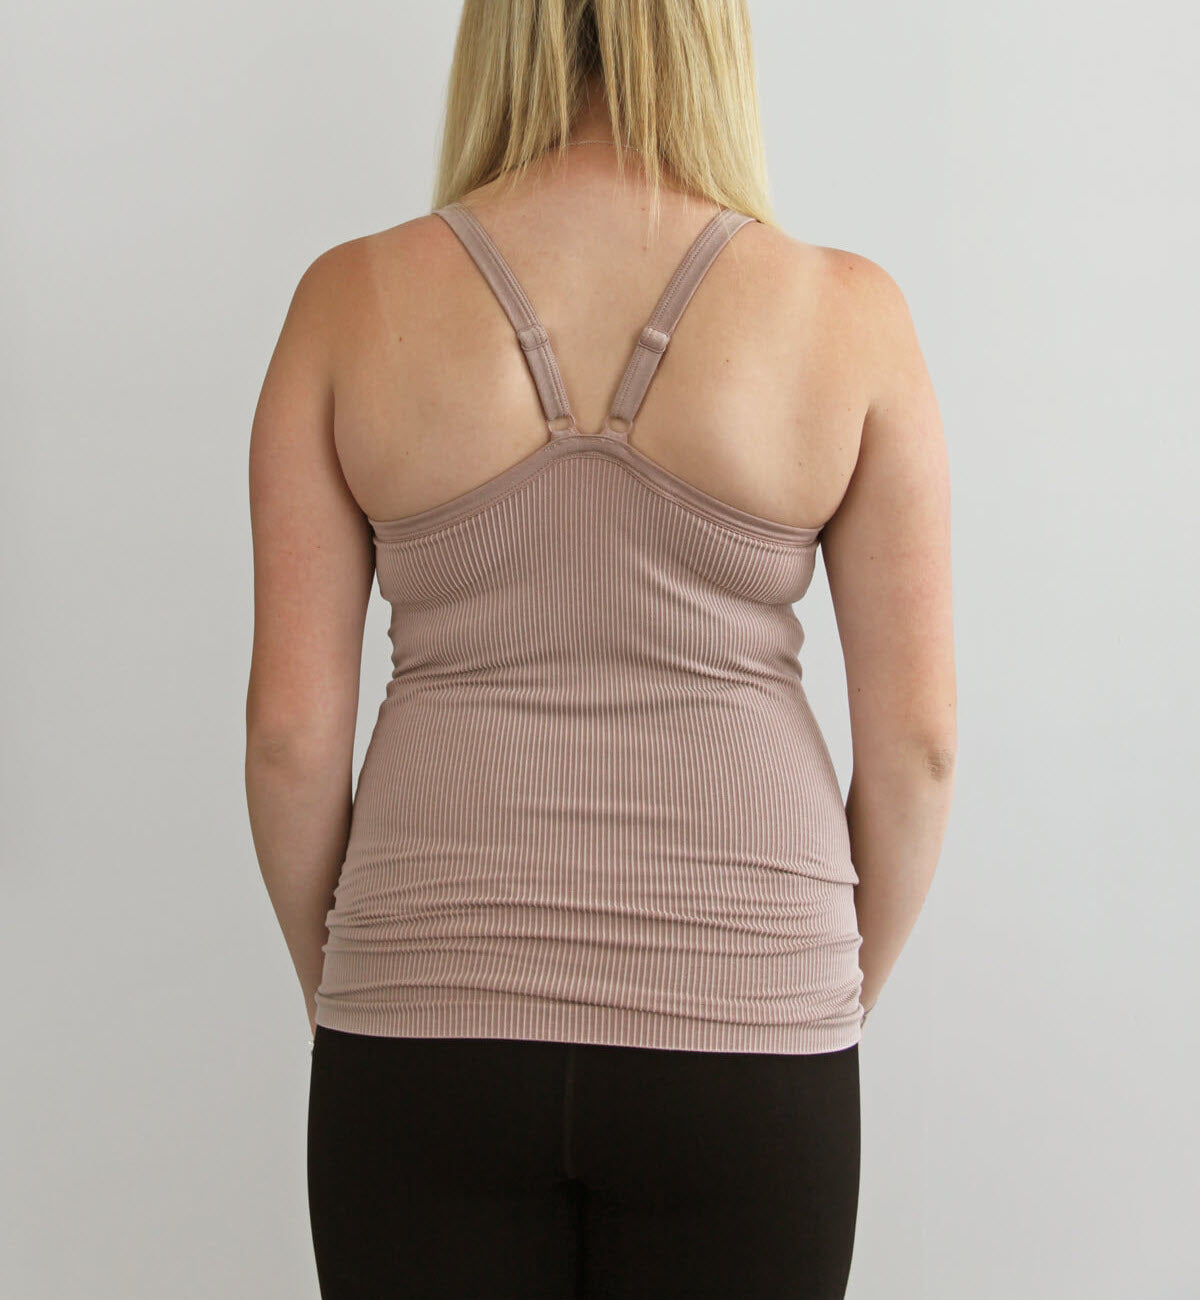 Yoga Design Lab ™ Genie Cami Shaper Tank Top/Spanx/Camisole